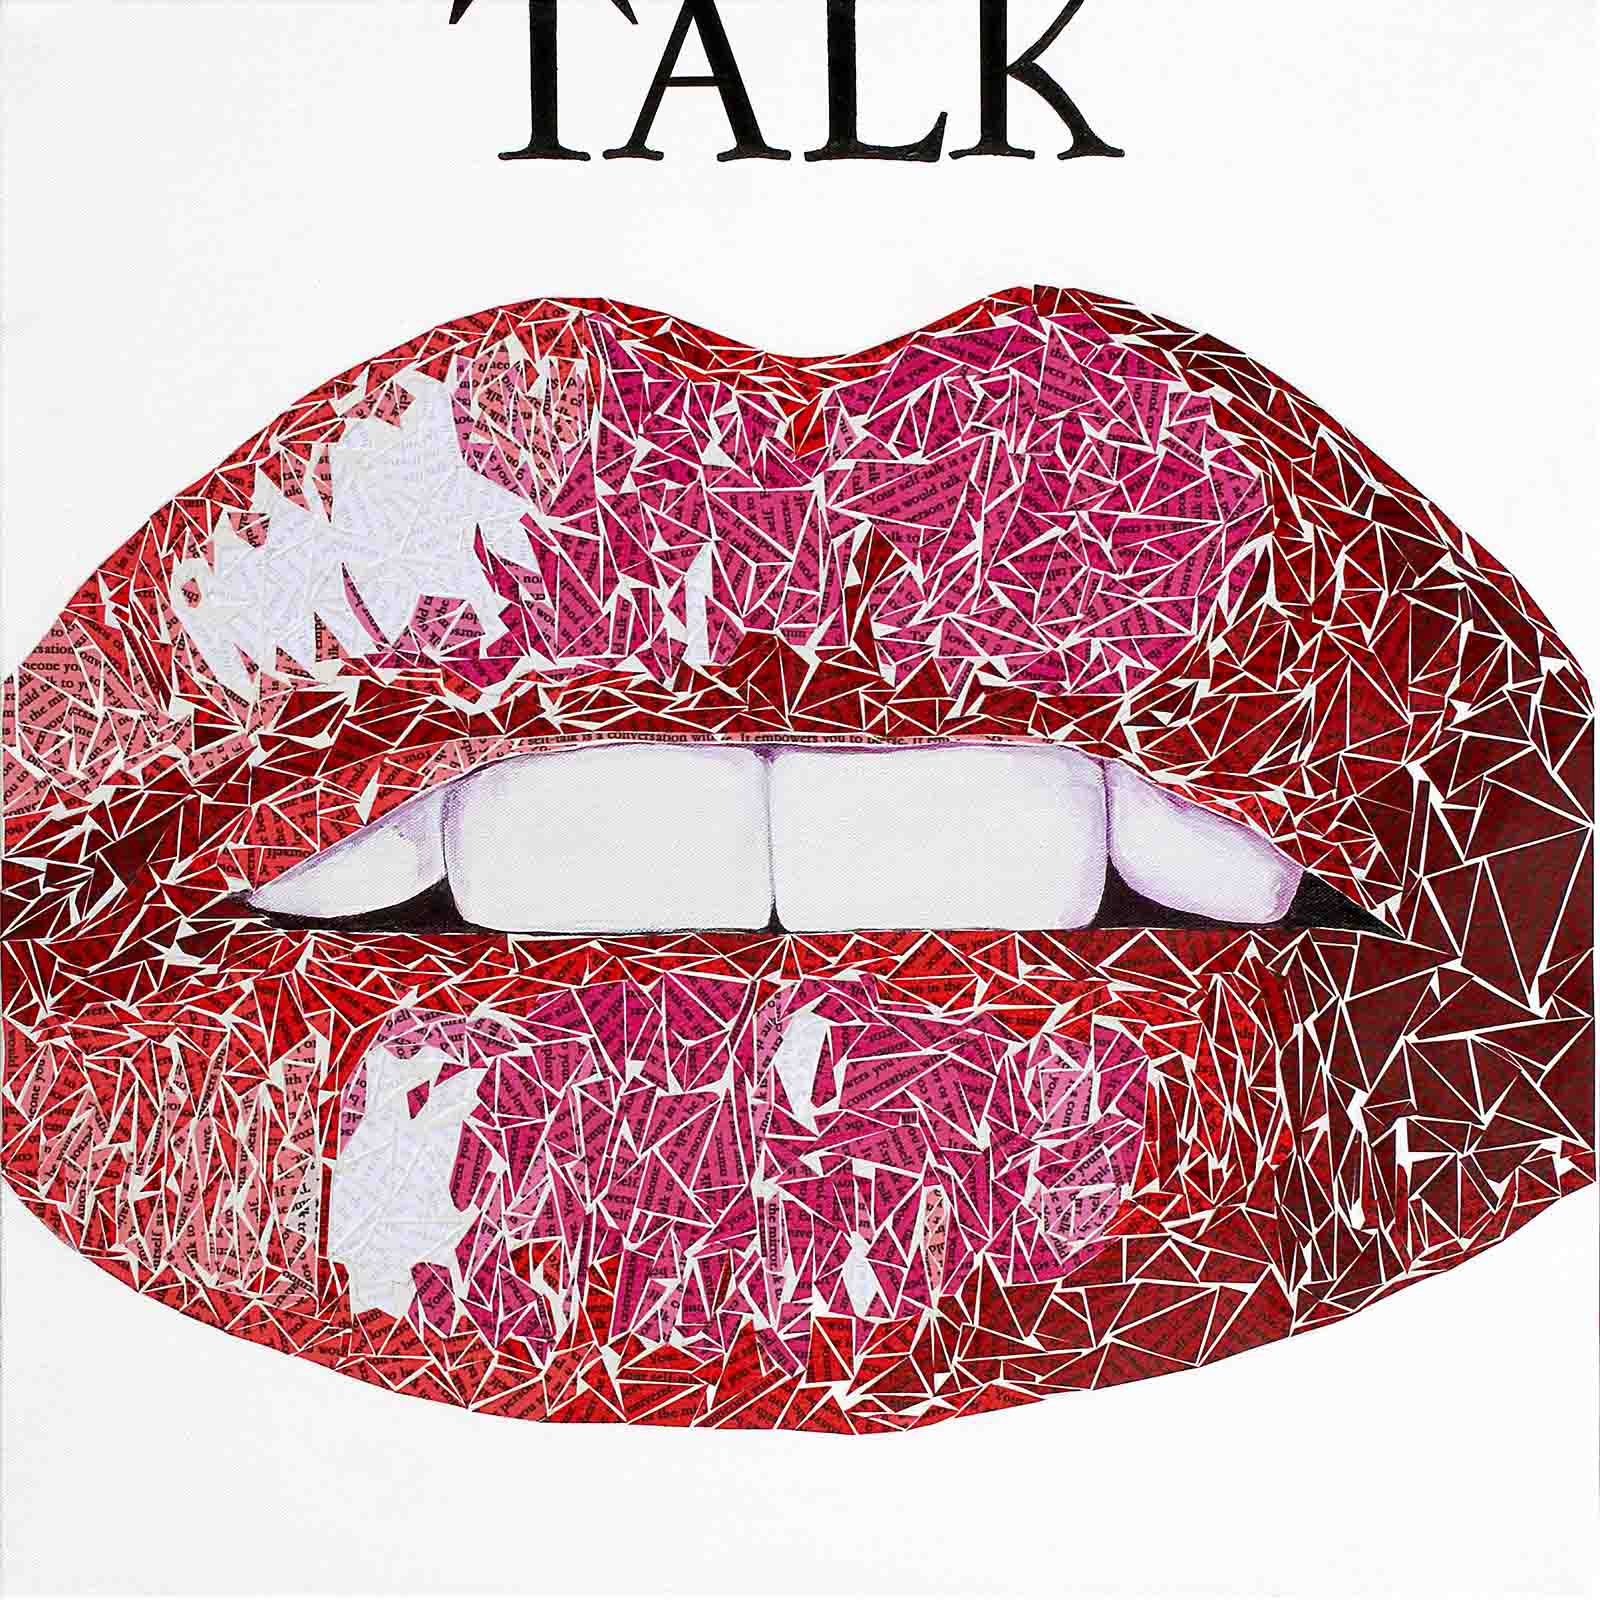 TALK - lips artwork | 24"x24" | Susan Clifton